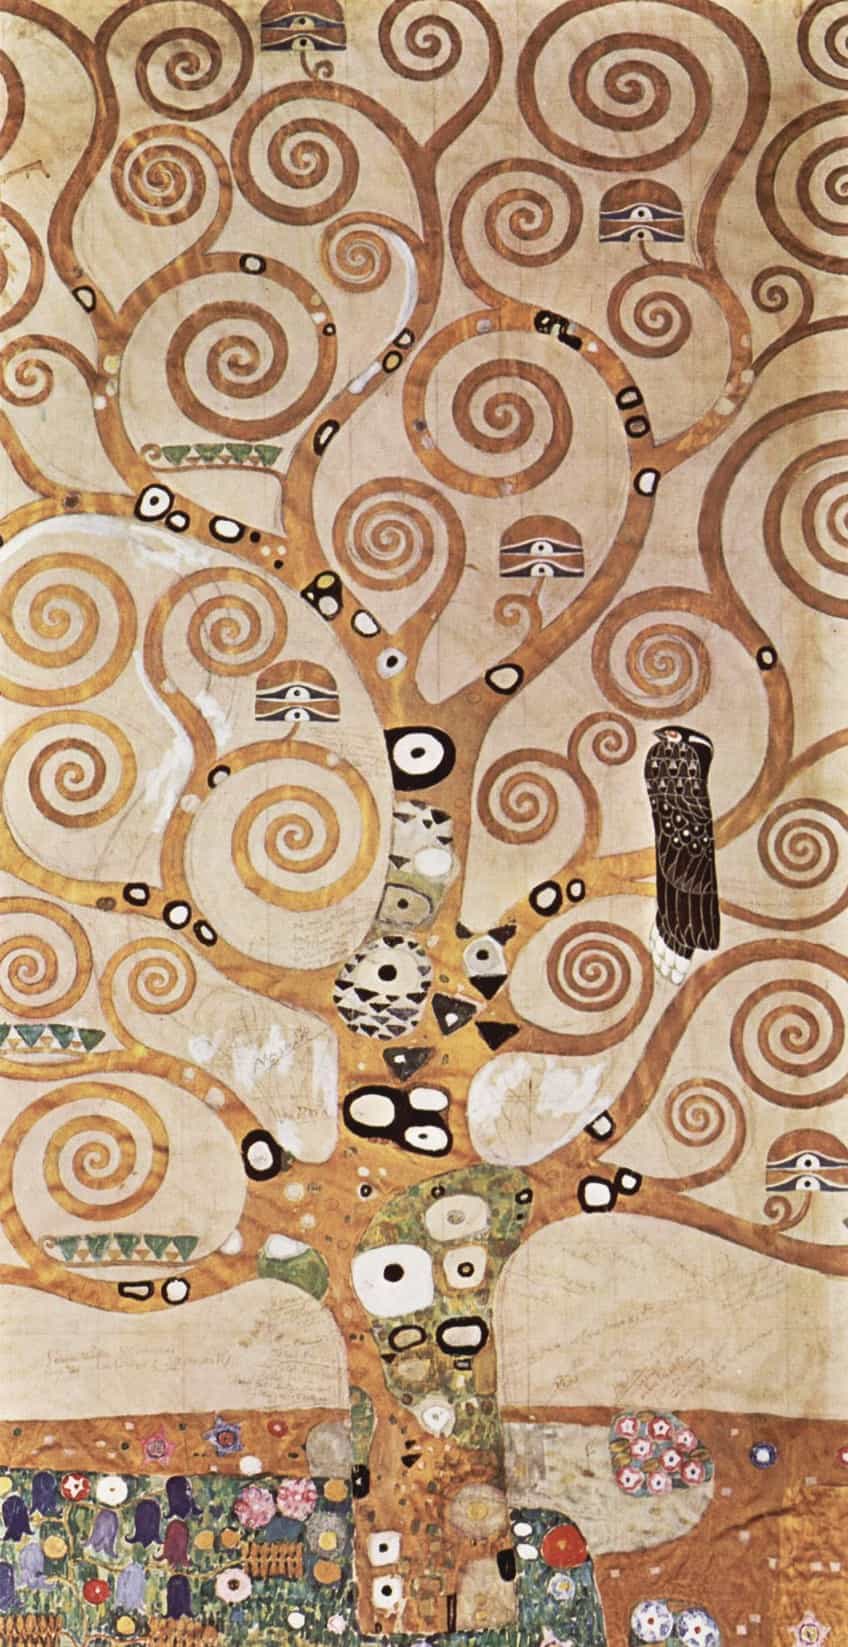 Where Is Gustav Klimt Tree of Life Located